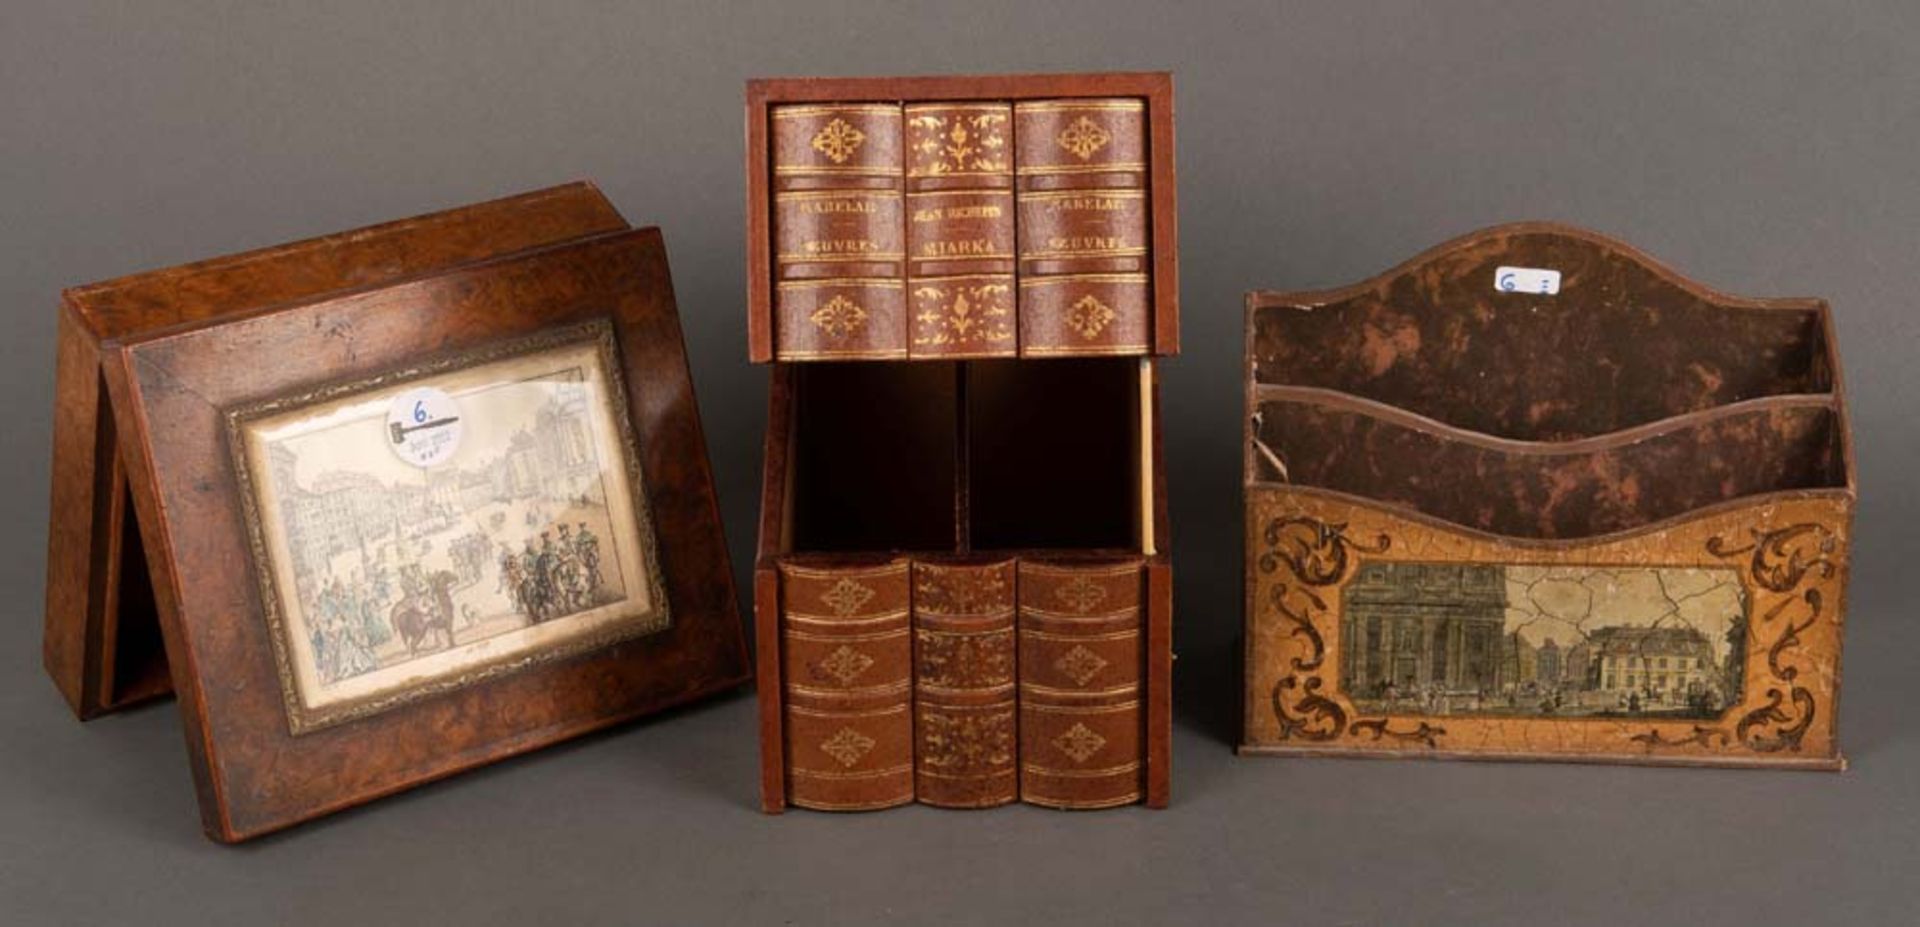 Dreitlgs. Konvolut. Deutsch bzw. England 19./20.Jh. Rechteckige Zigarrenbox (6,5 x 23 x 19,5 cm),